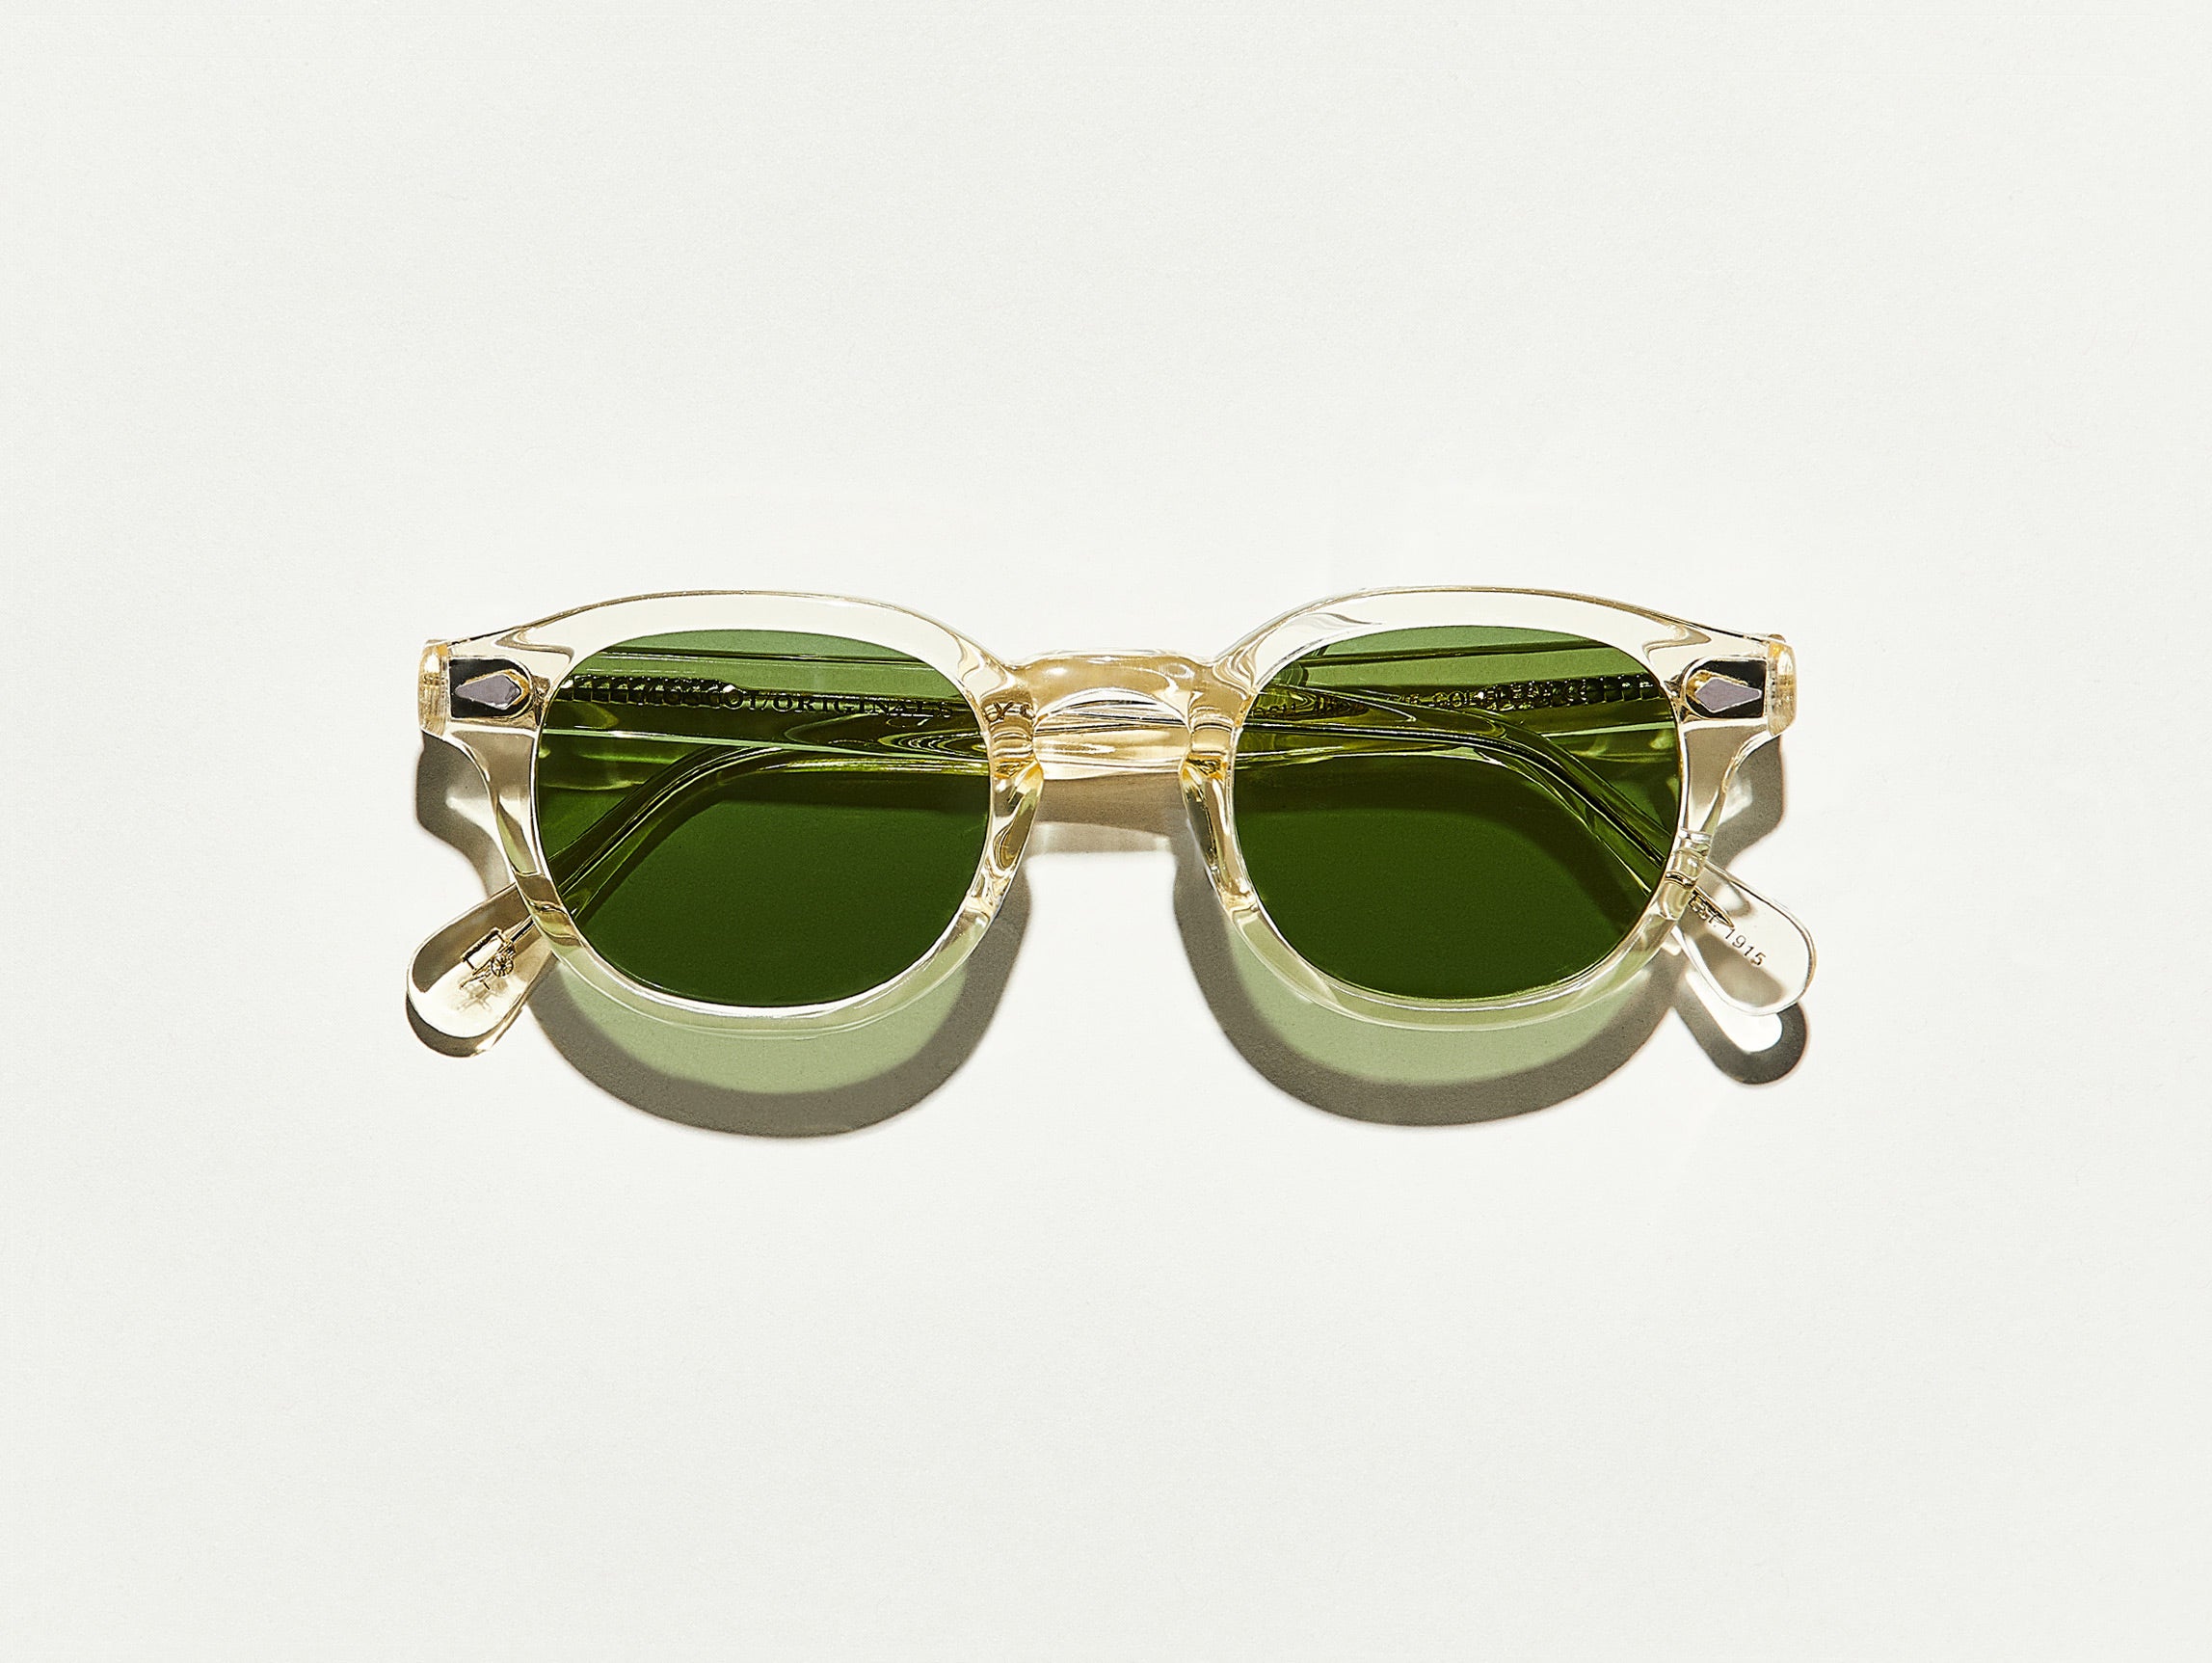 ORIGINALS Sunglasses | NYC Frames & Styles